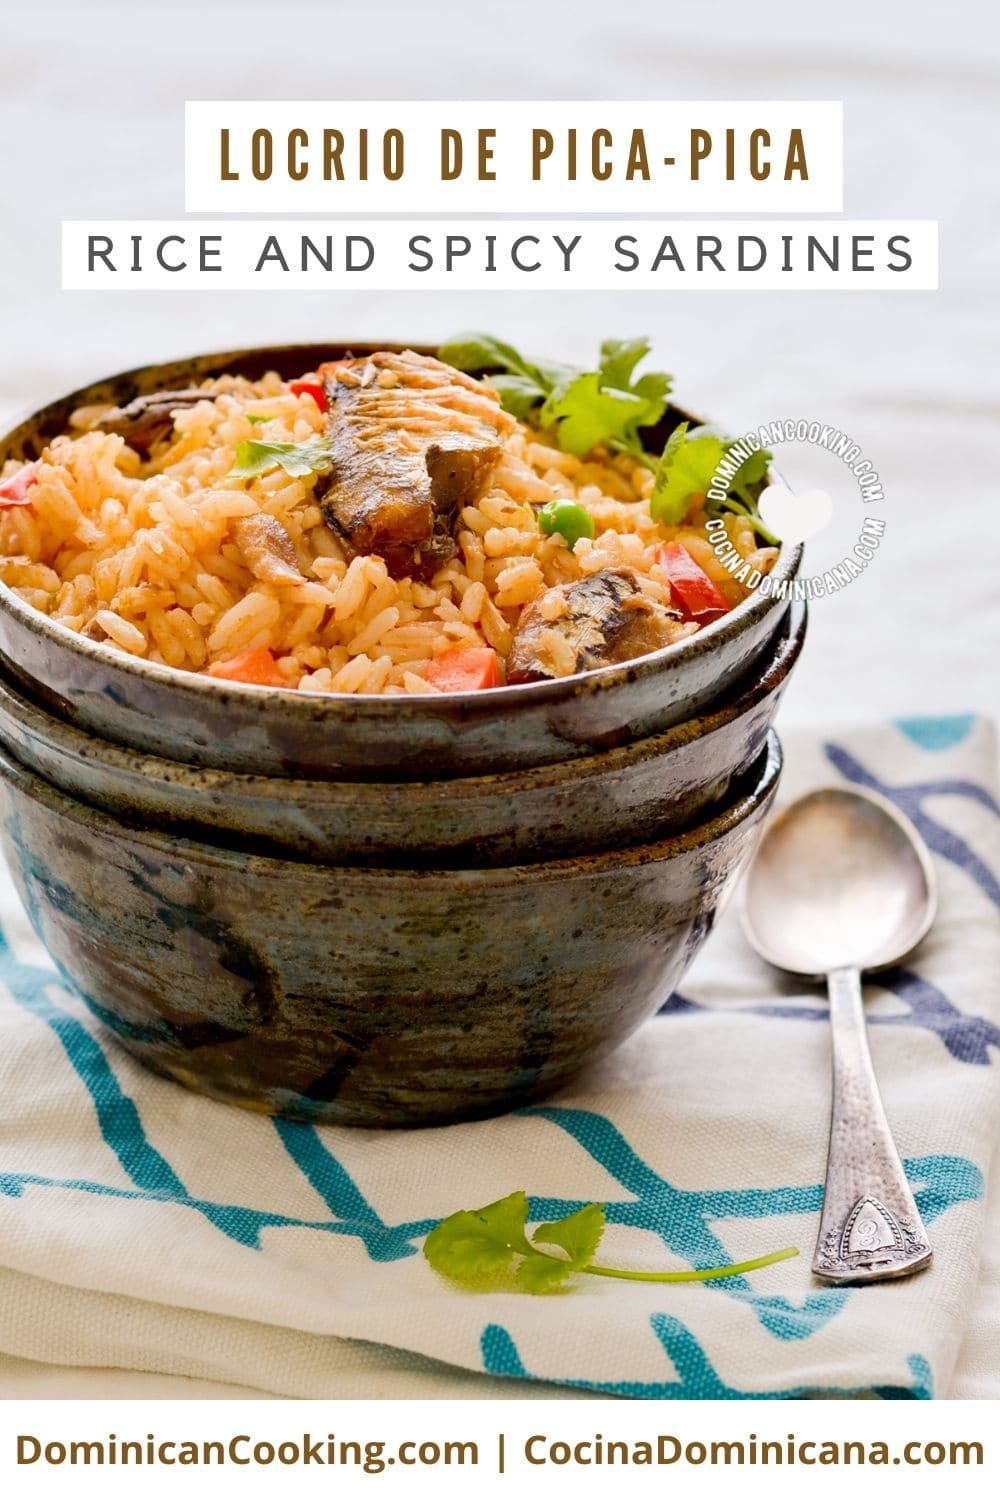 Locrio de Pica-Pica (rice and spicy sardines) recipe.